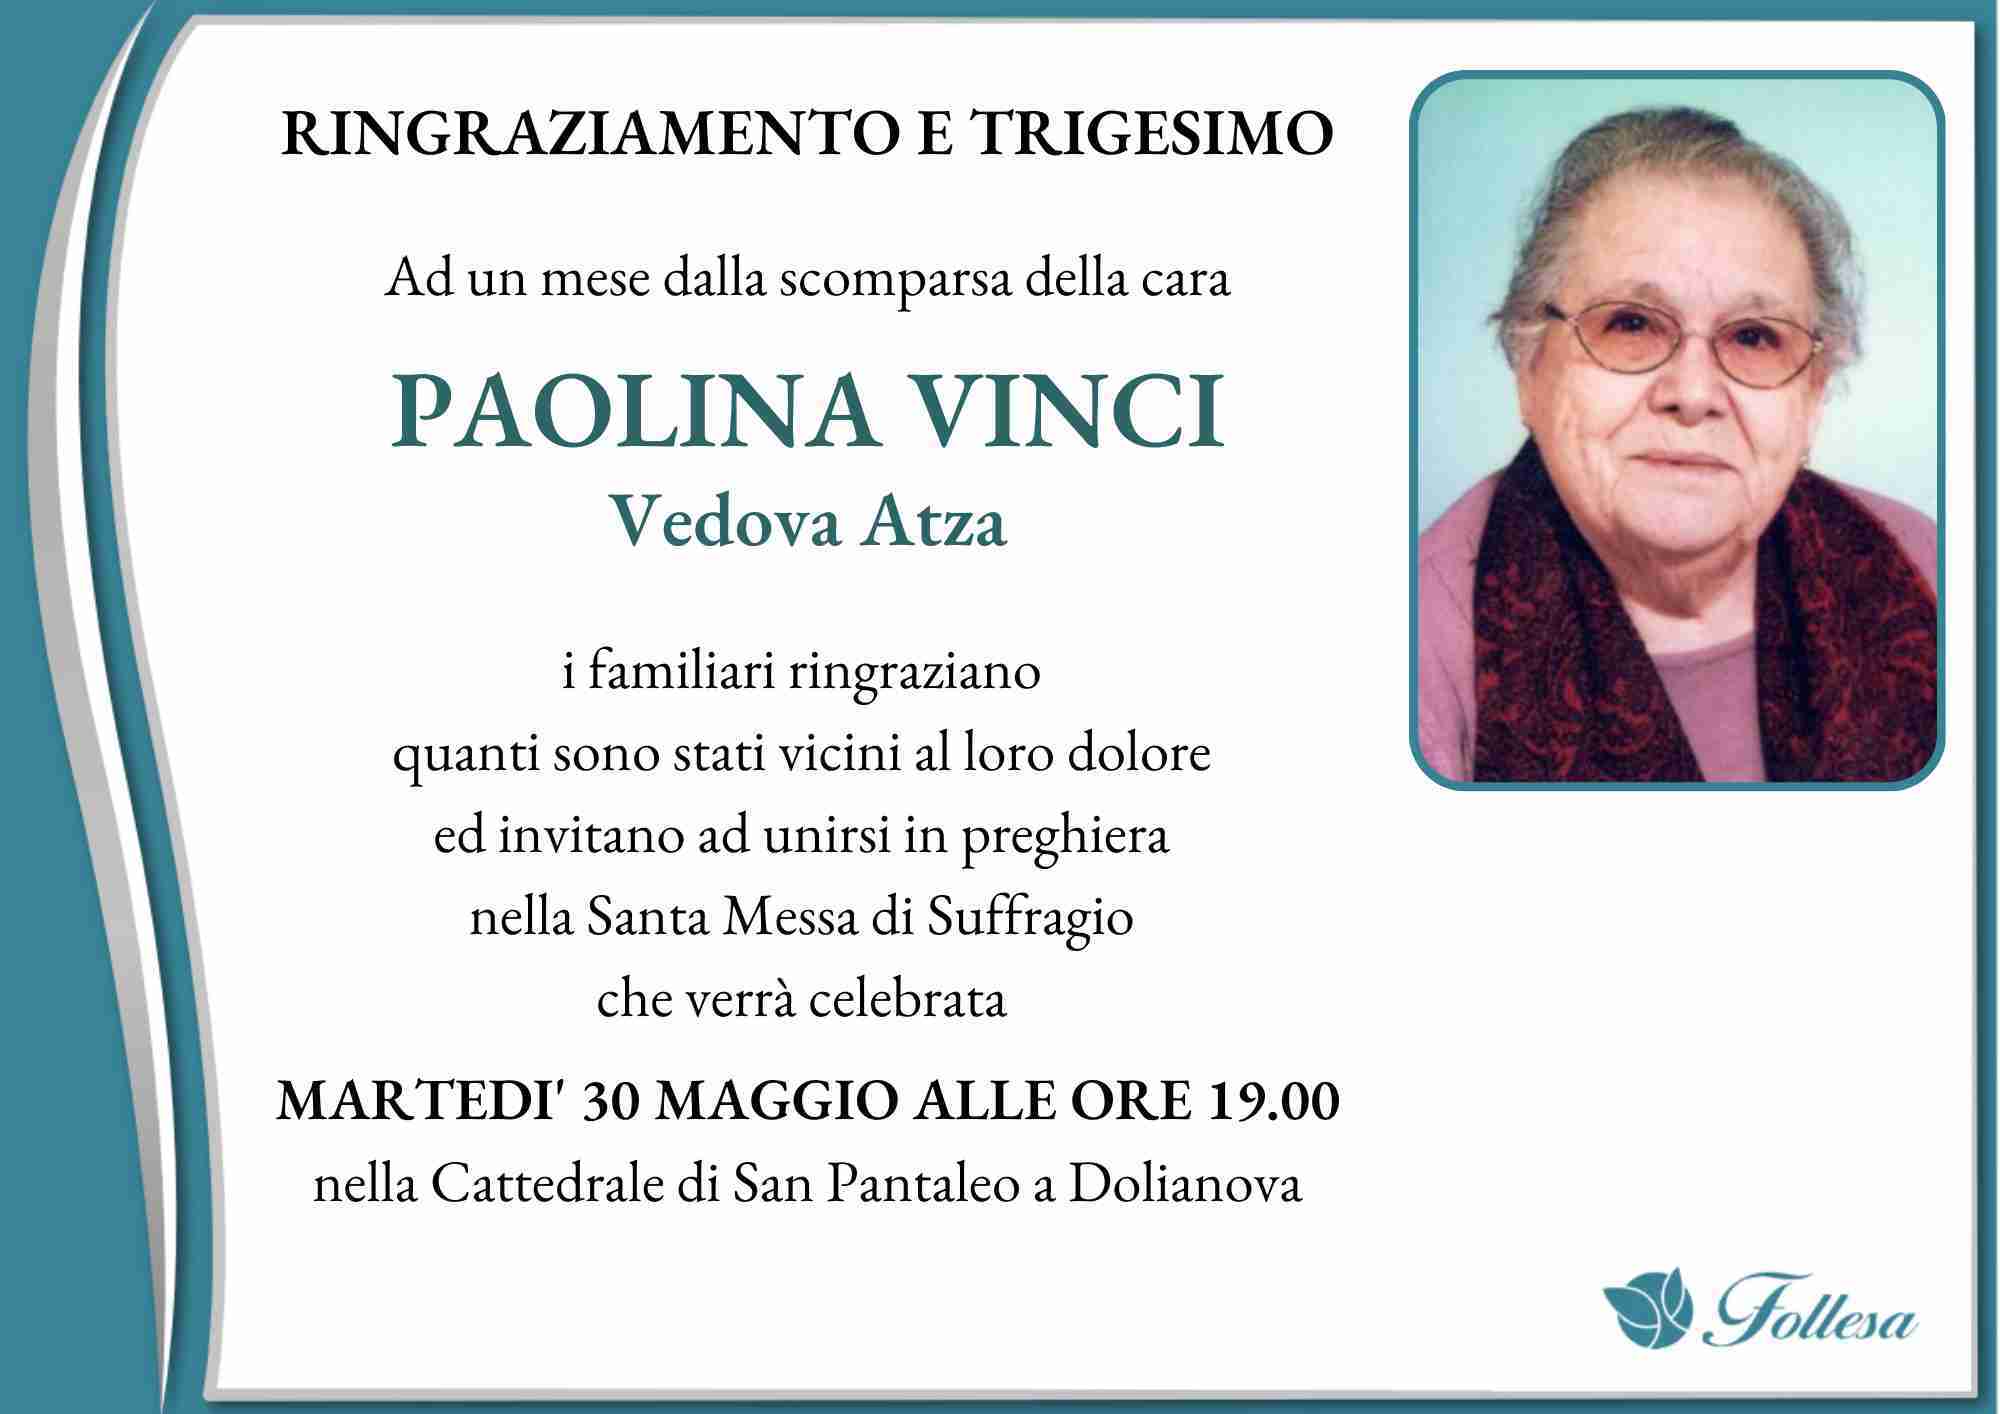 Paolina Vinci